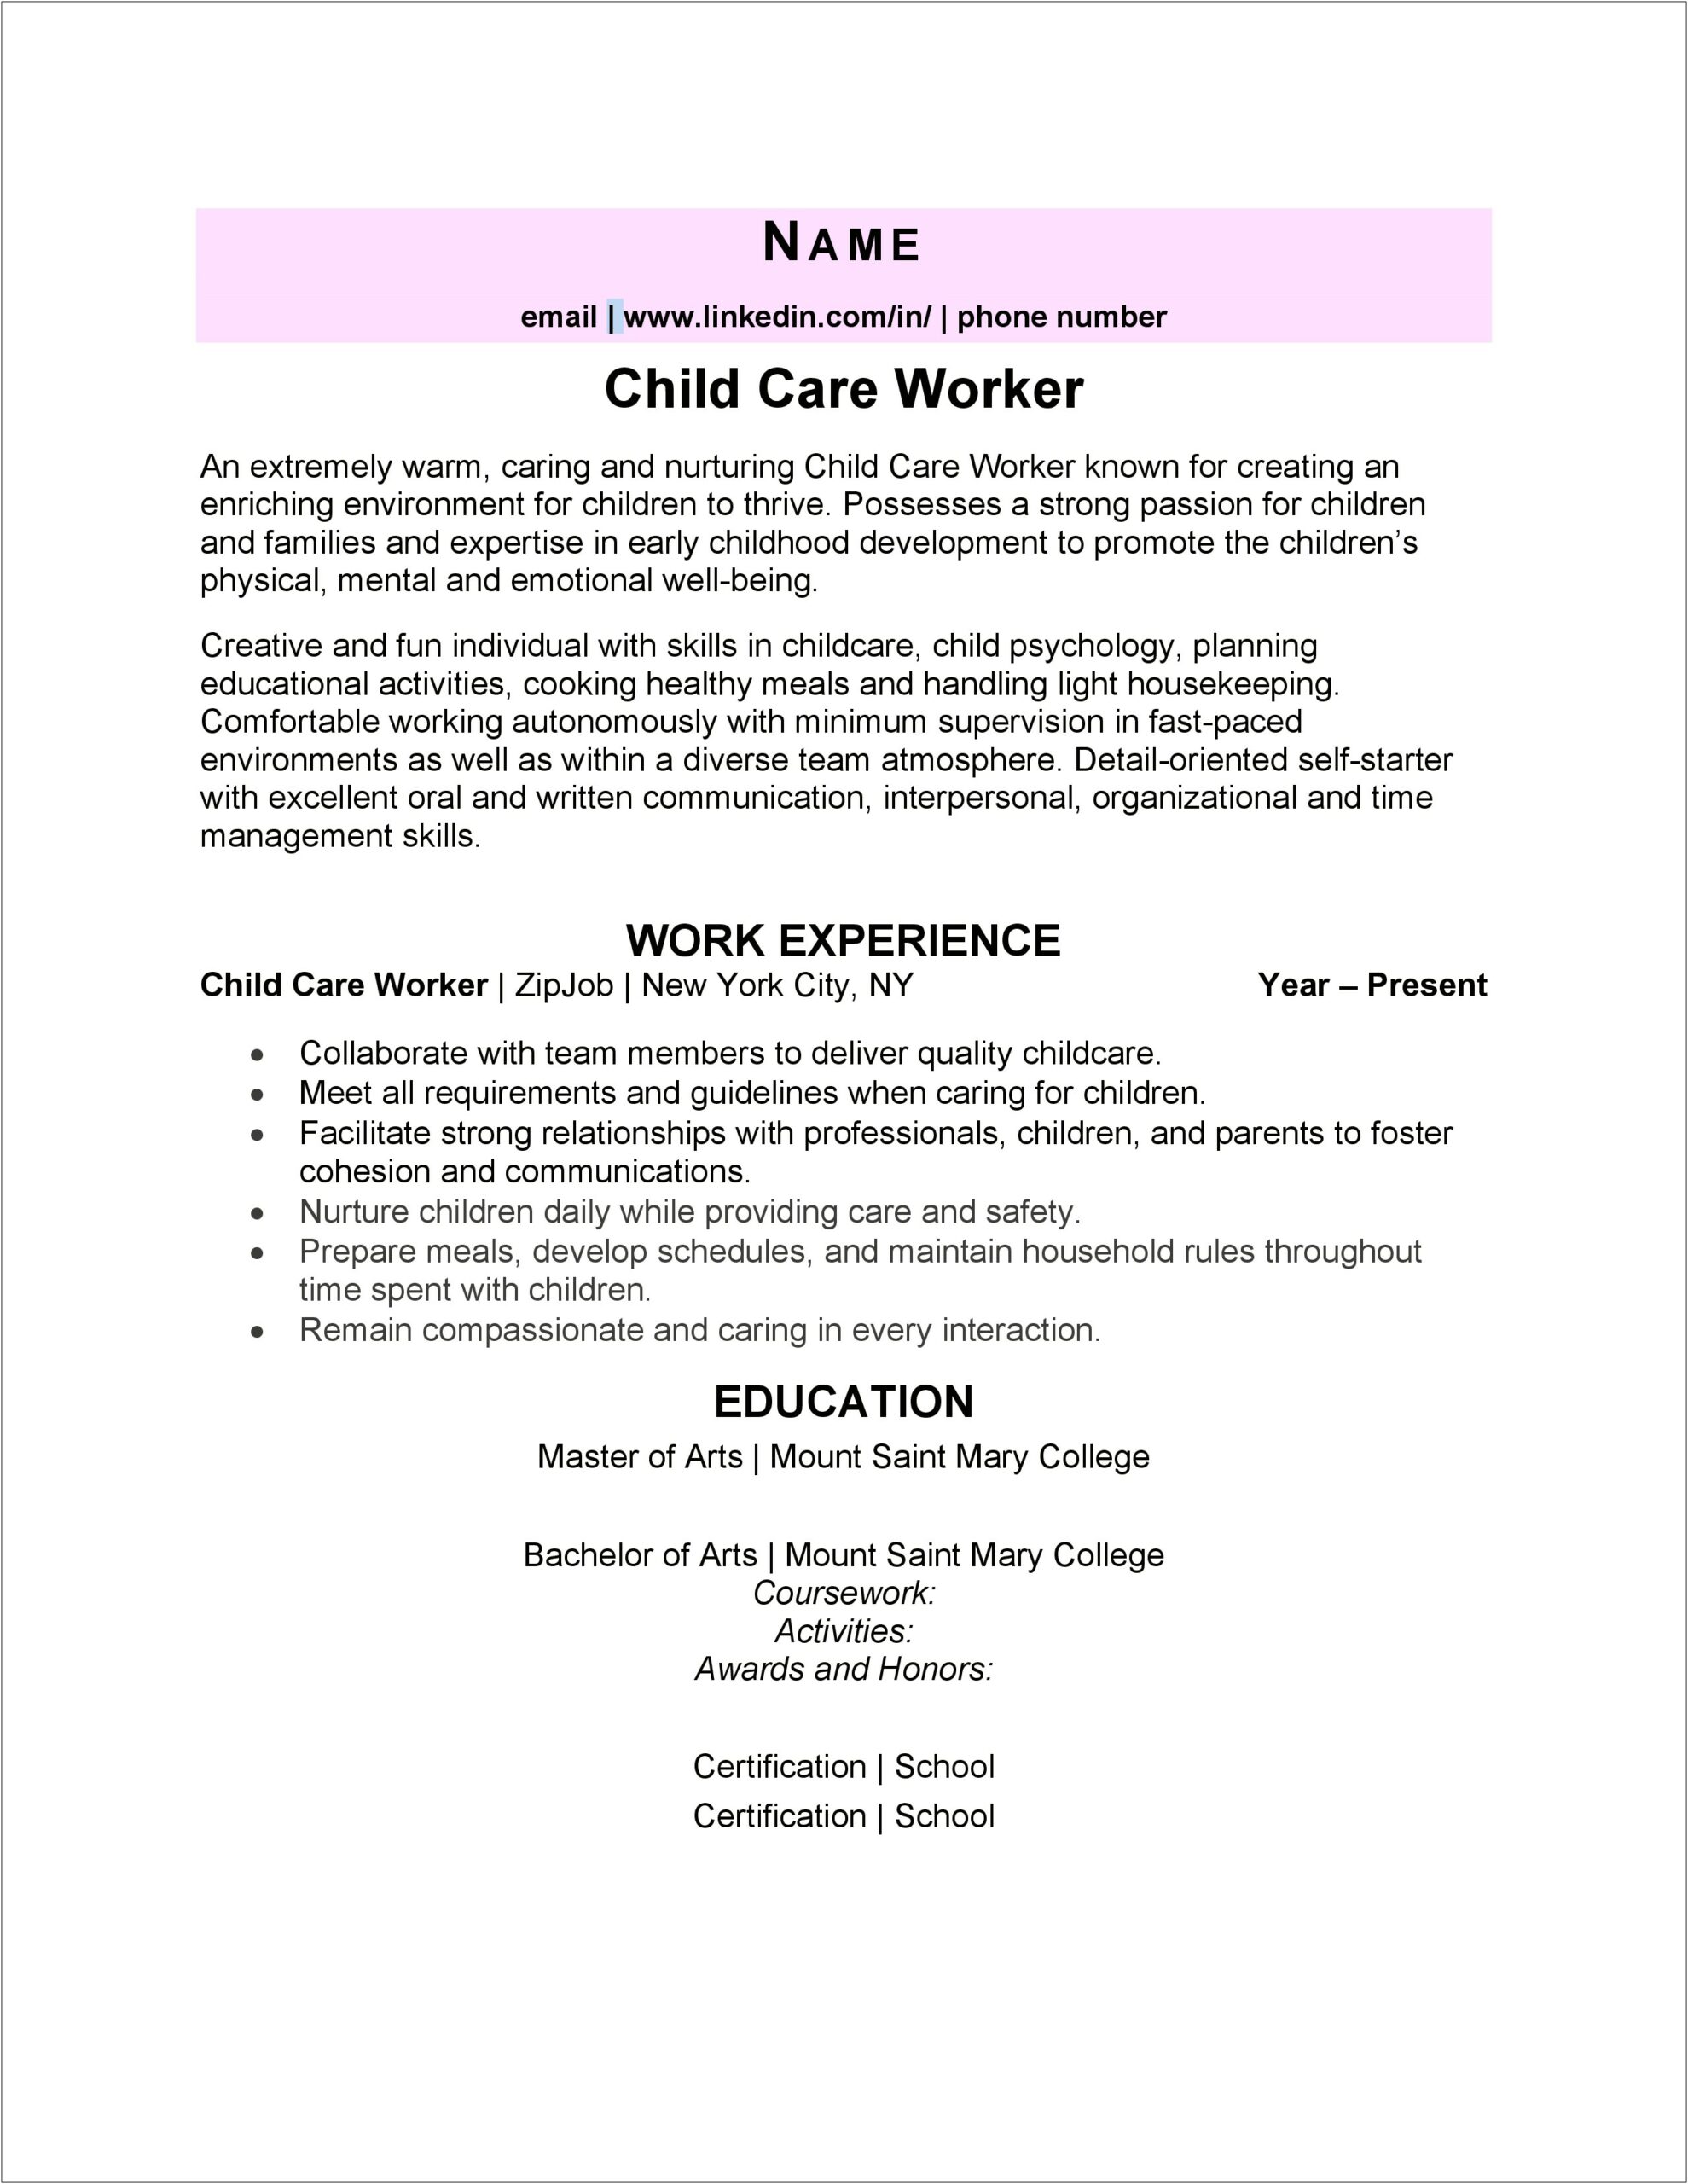 Sample Resume Format For Child Care